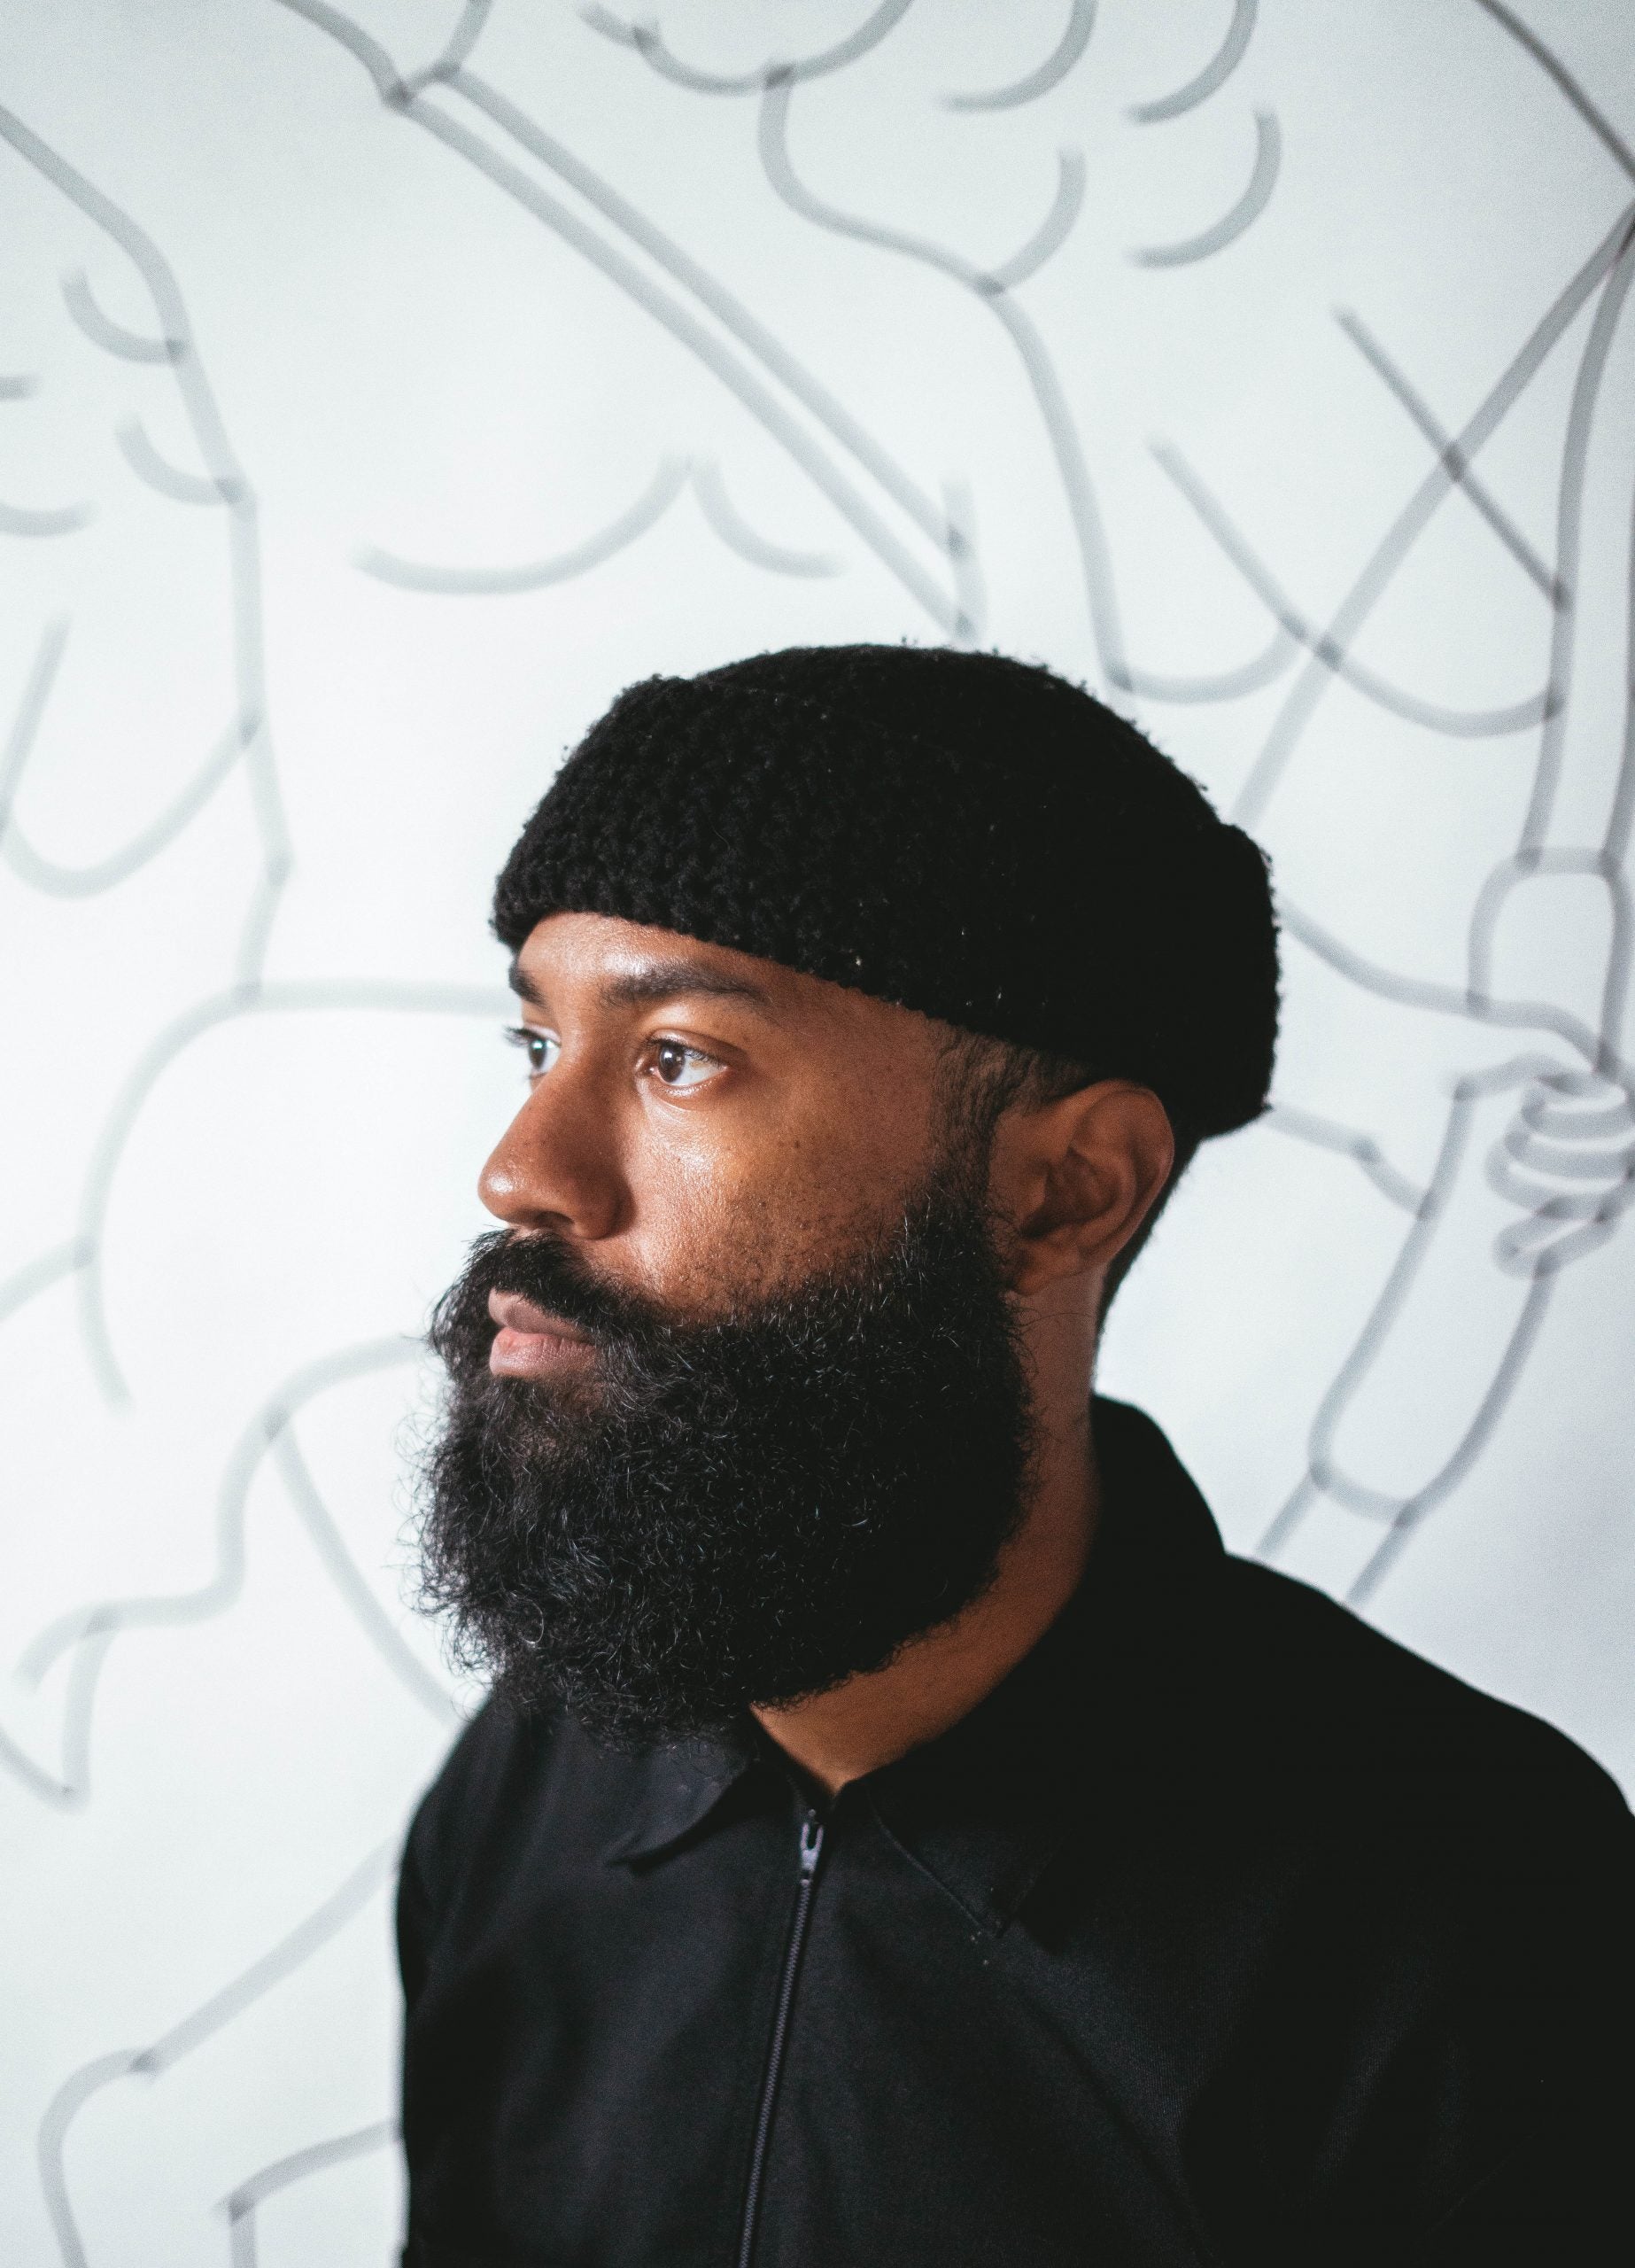 Vans Tap Four Black Artist To Design Capsule Project